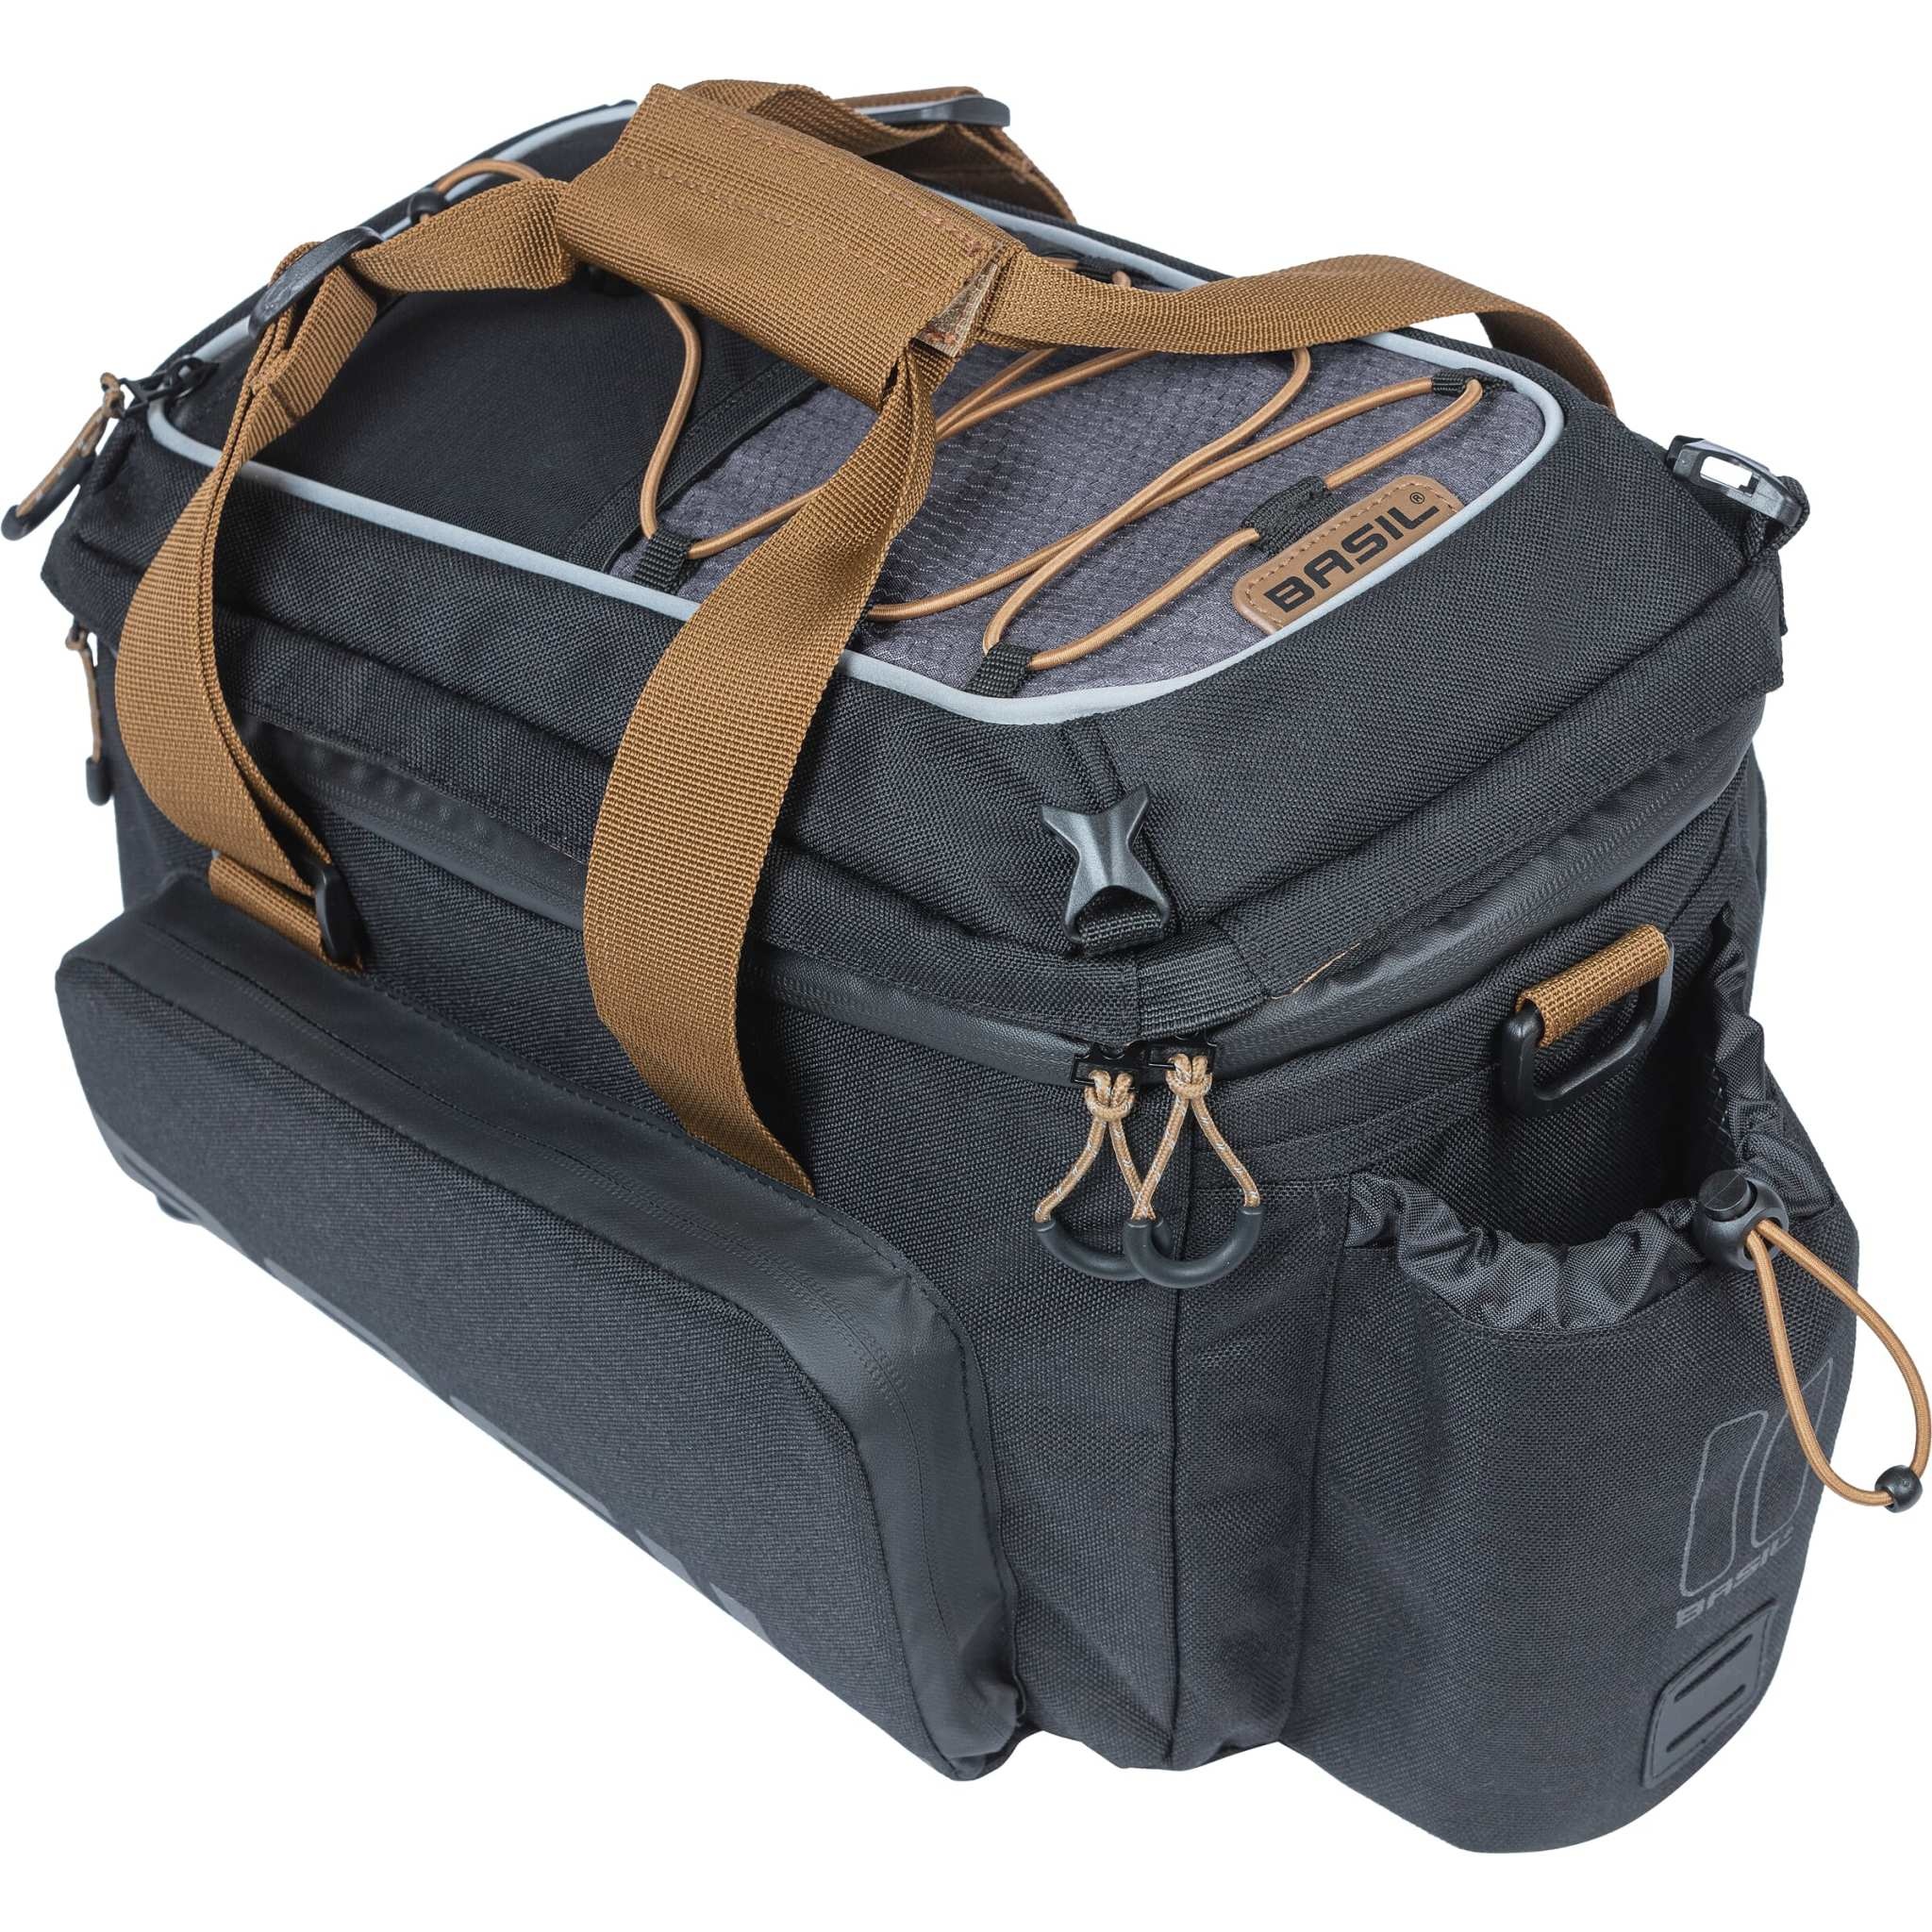 BASIL MILES Trunck Bag XL PRO bagagedragertas black slate MIK waterproof -  Thomas Cycles